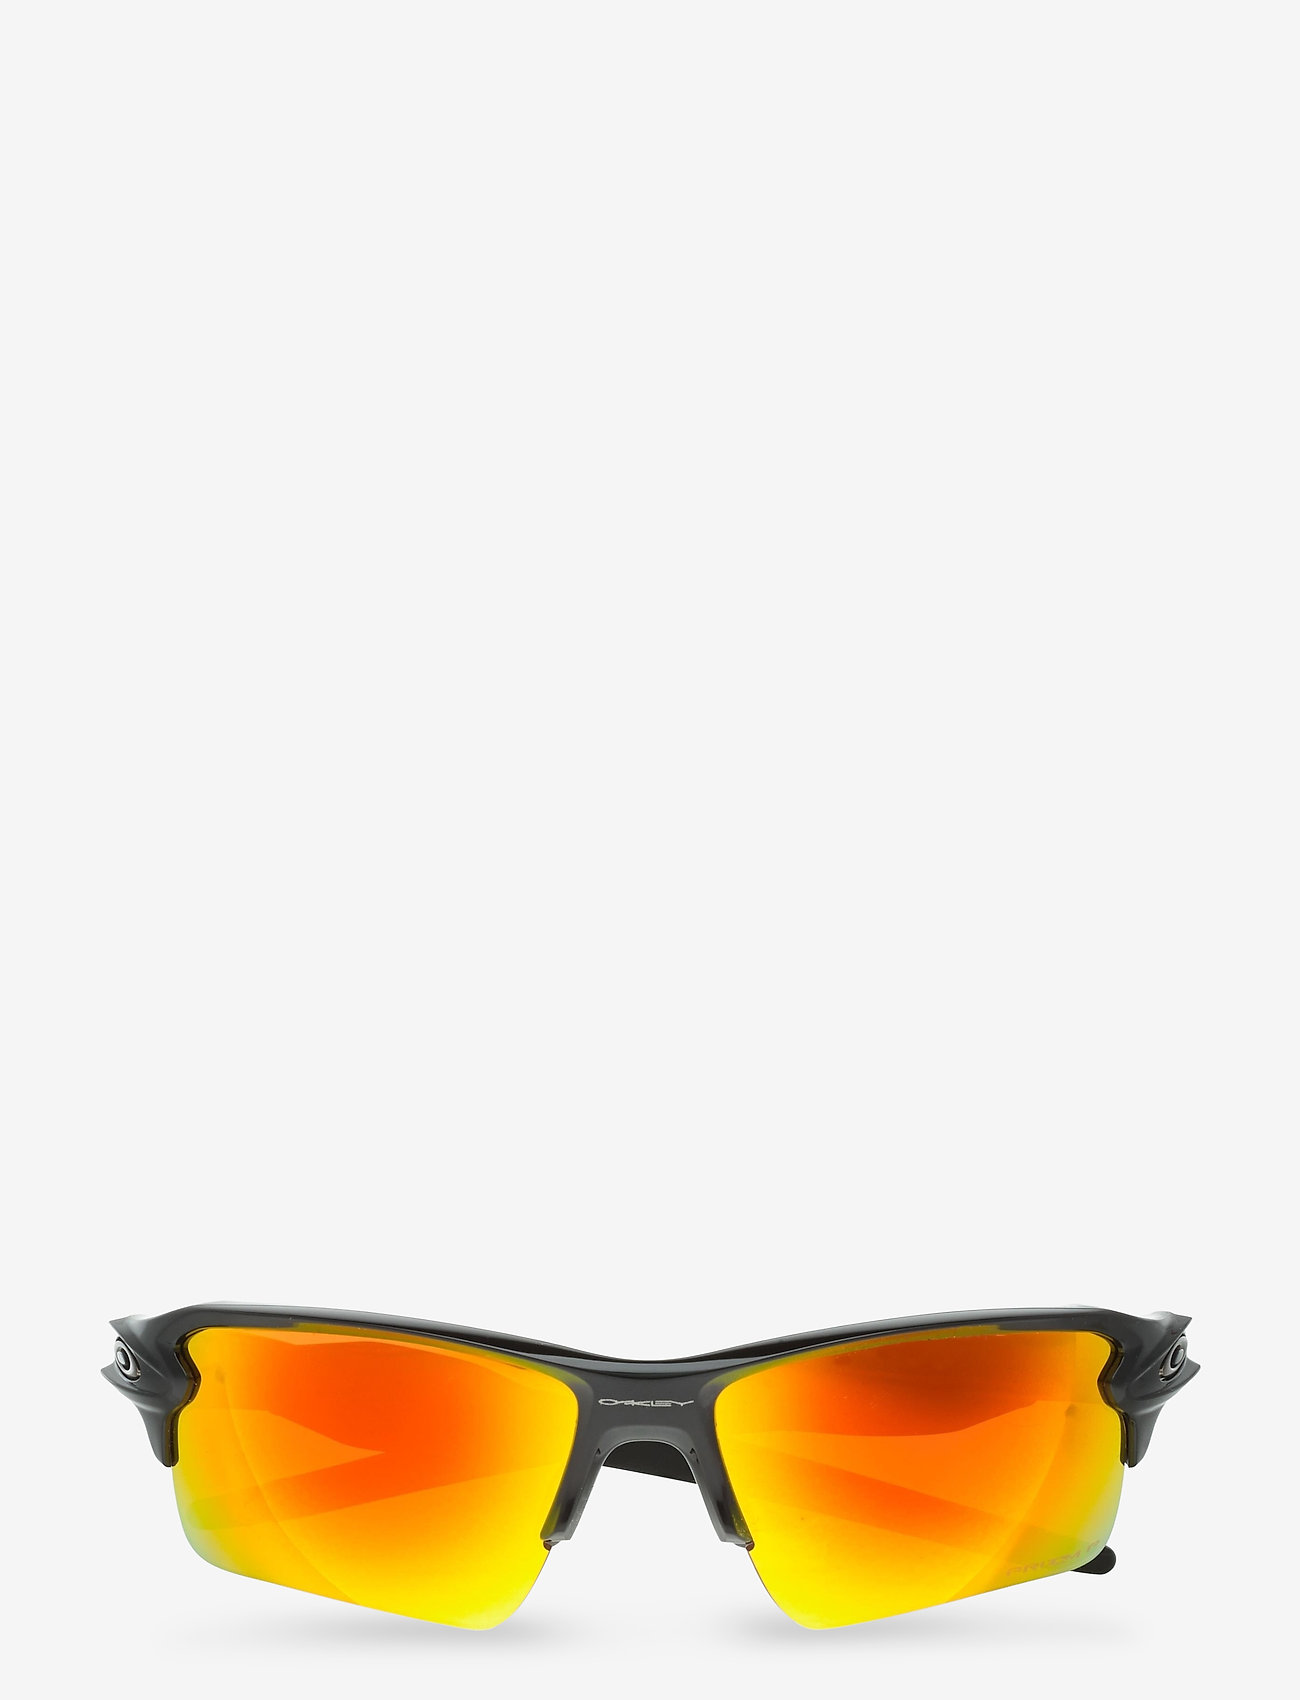 oakley flak 2.0 xl prizm sunglasses